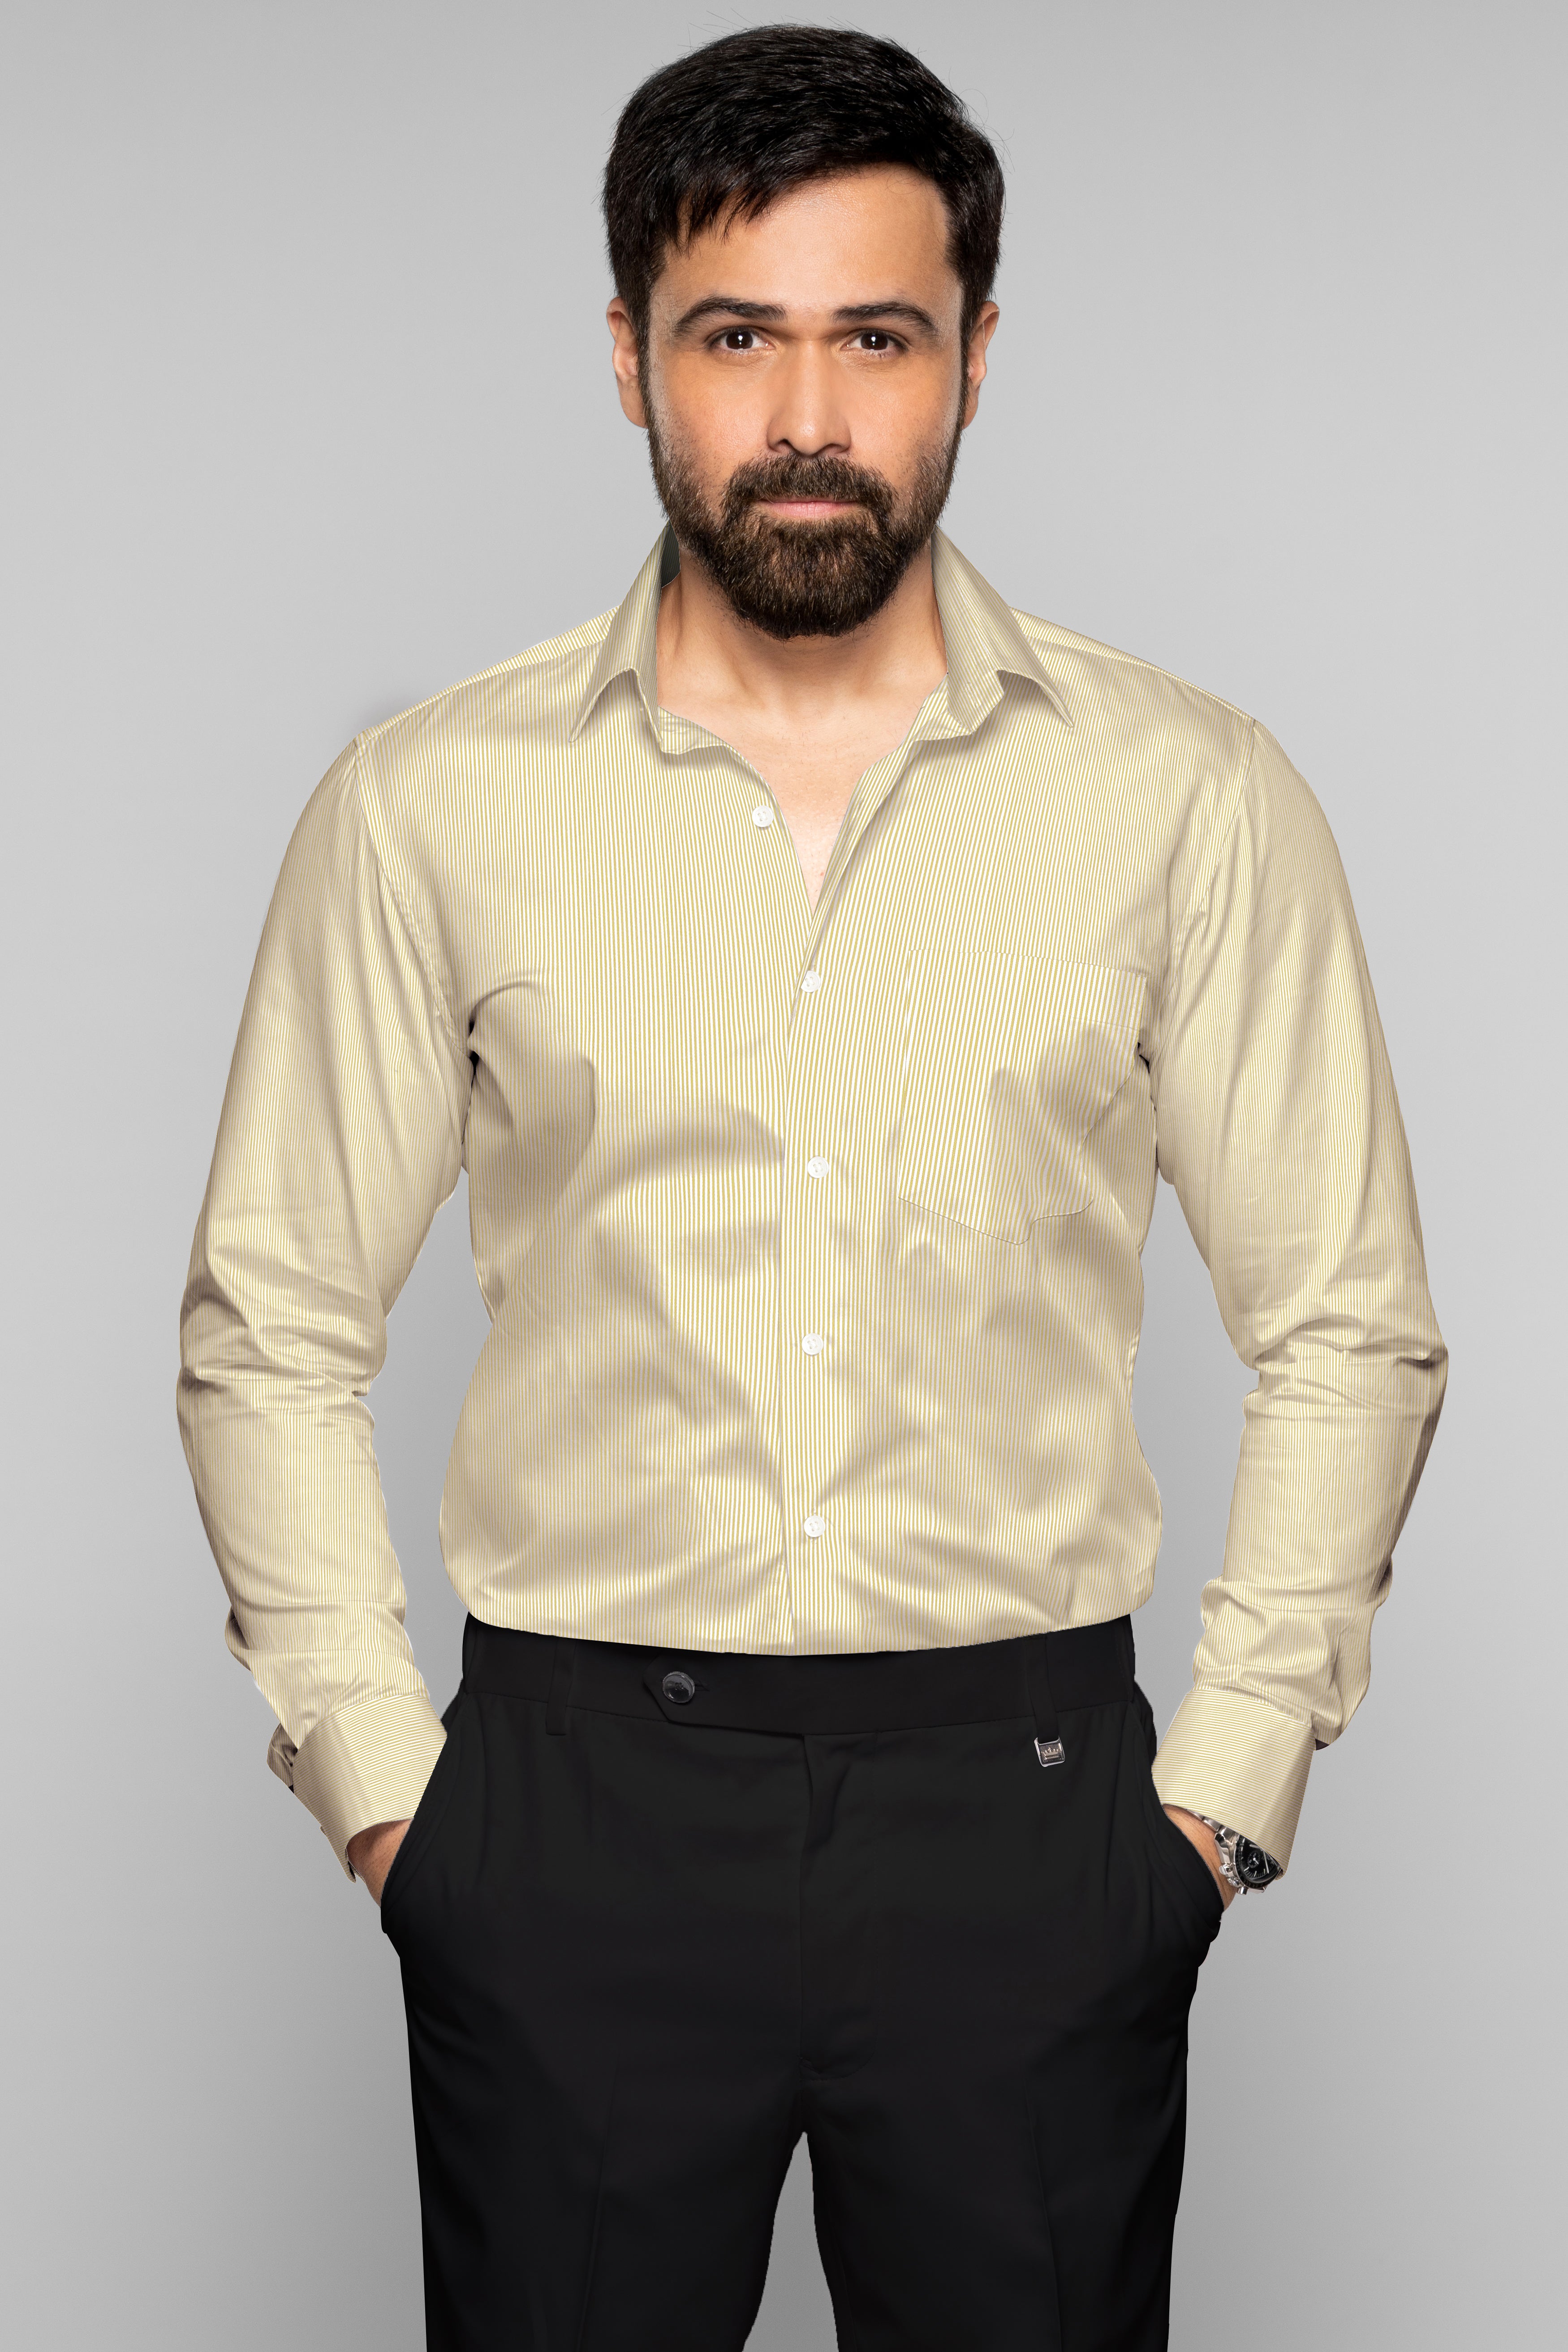 Desert Brown and White Pin Striped Premium Cotton Shirt